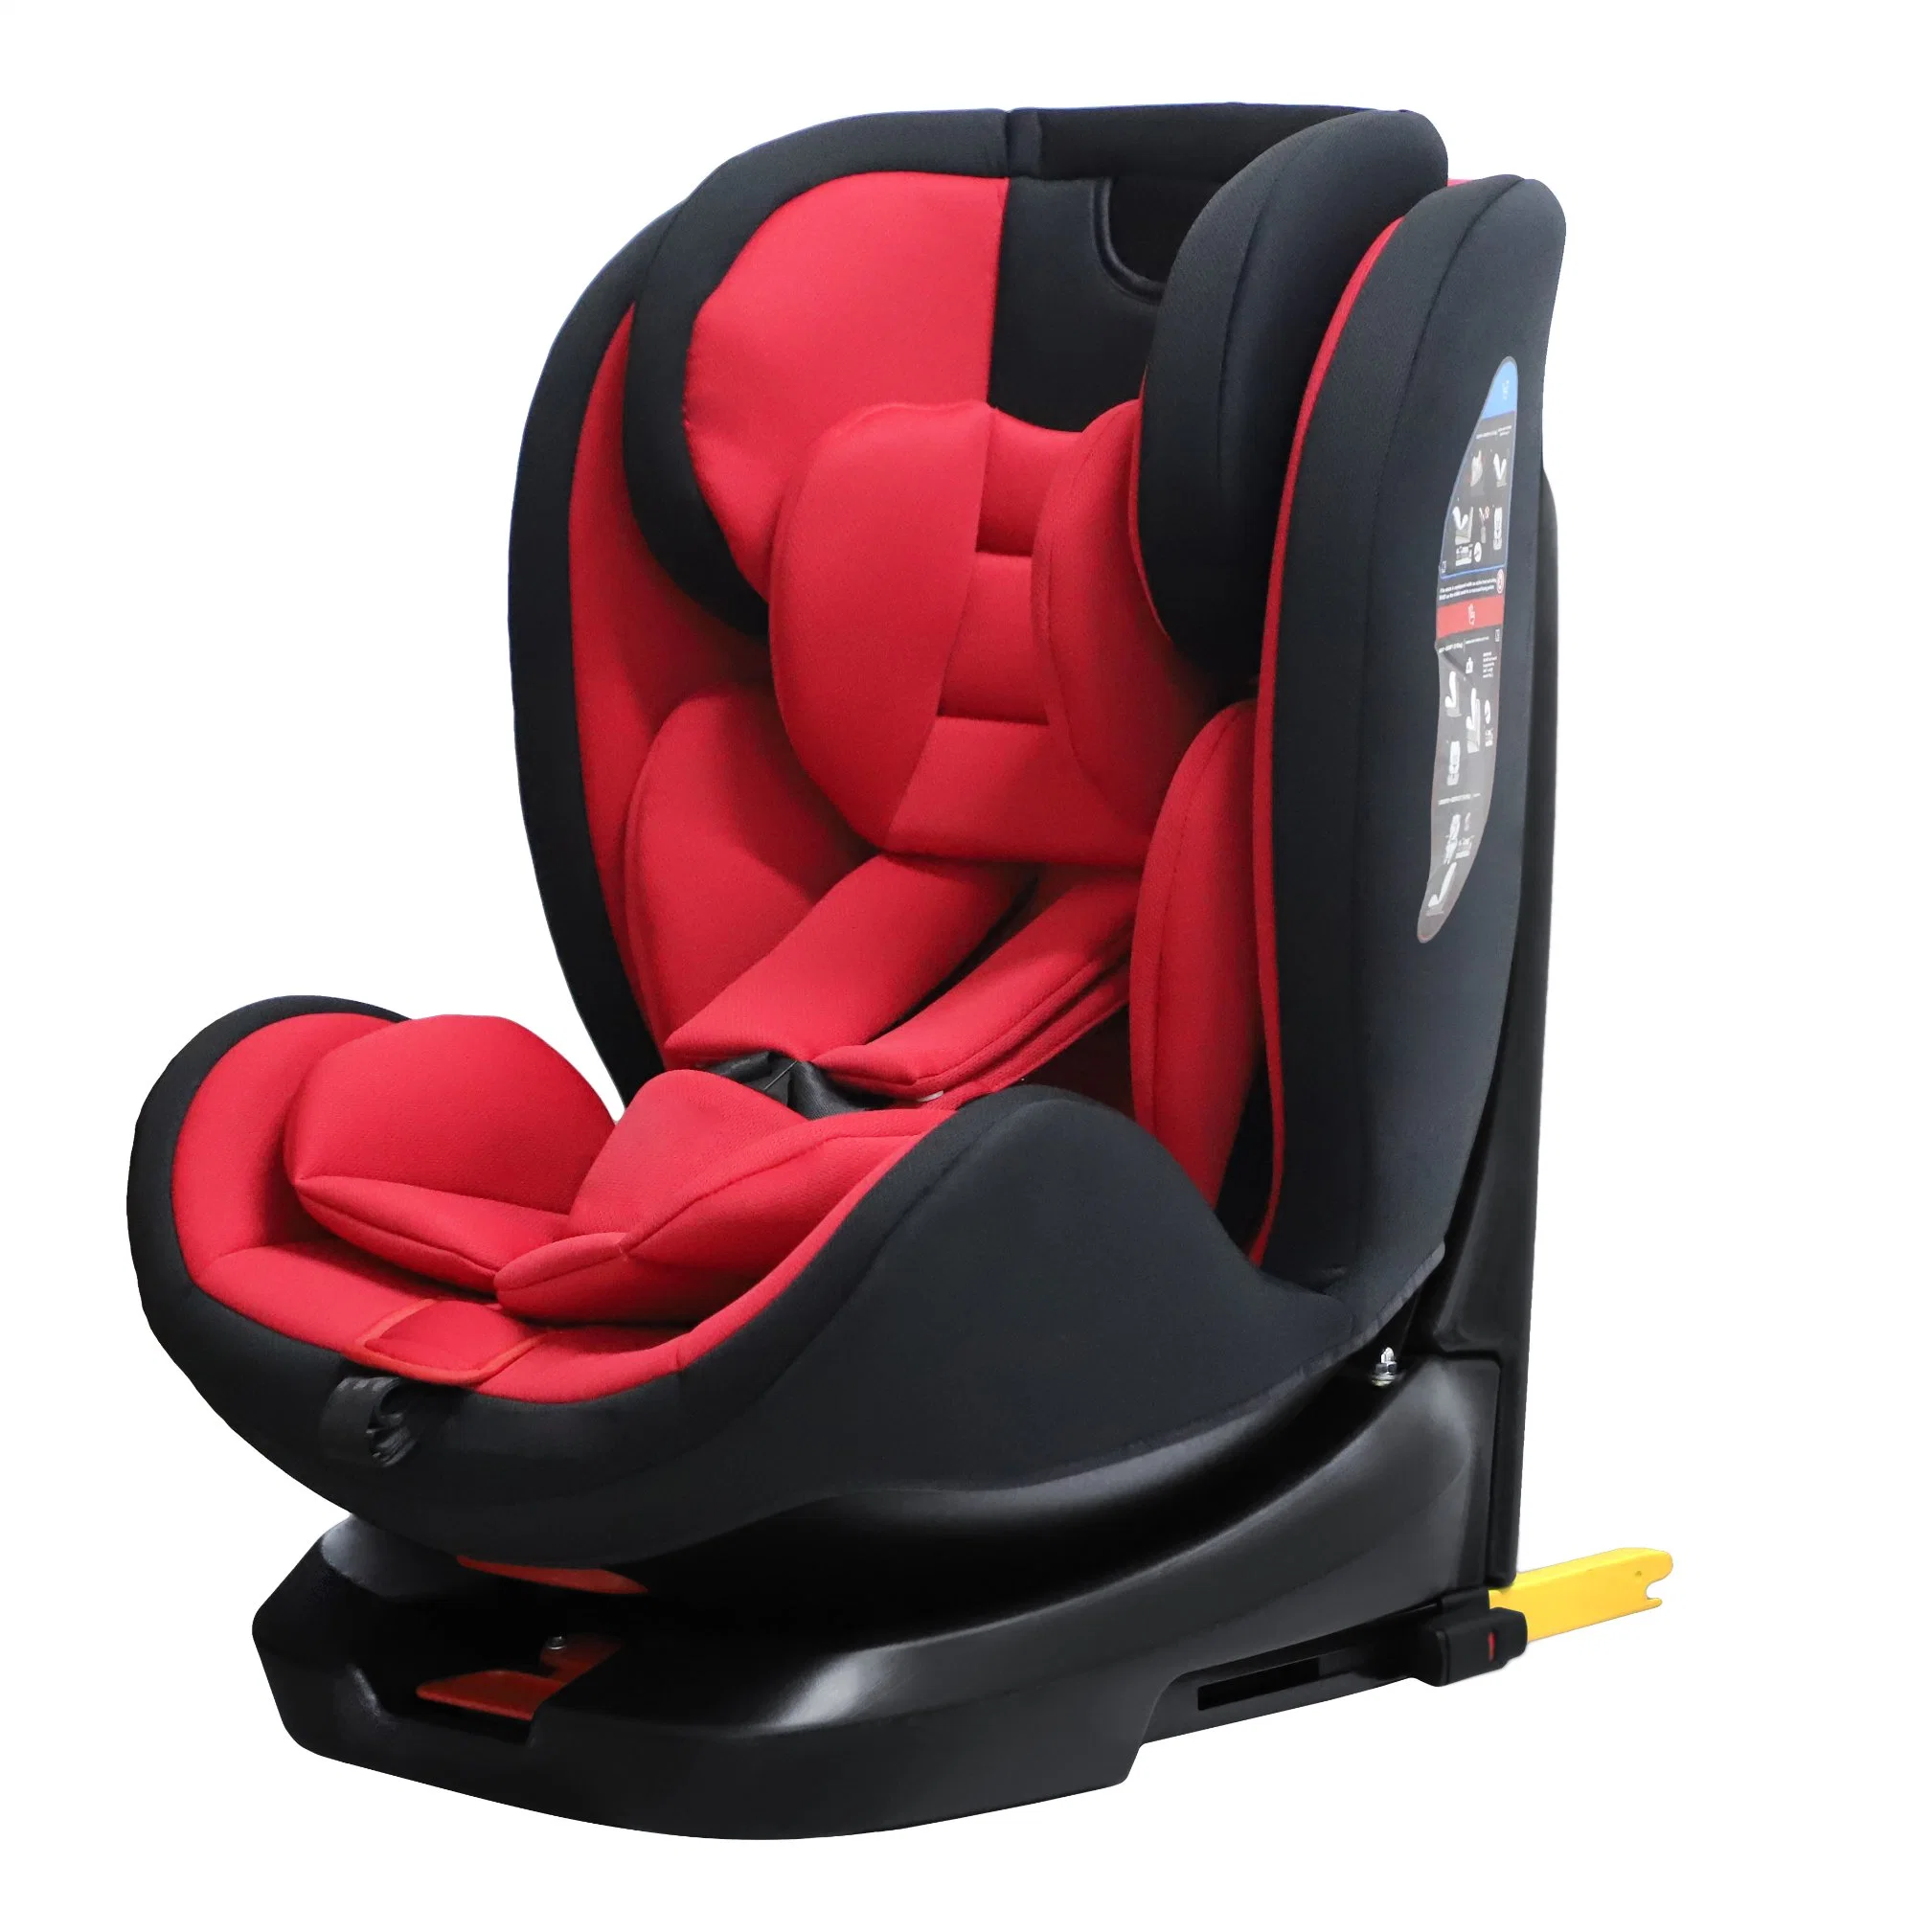 China Baby Car Seat Origin Manufacturer with ECE R44/04 Certificate